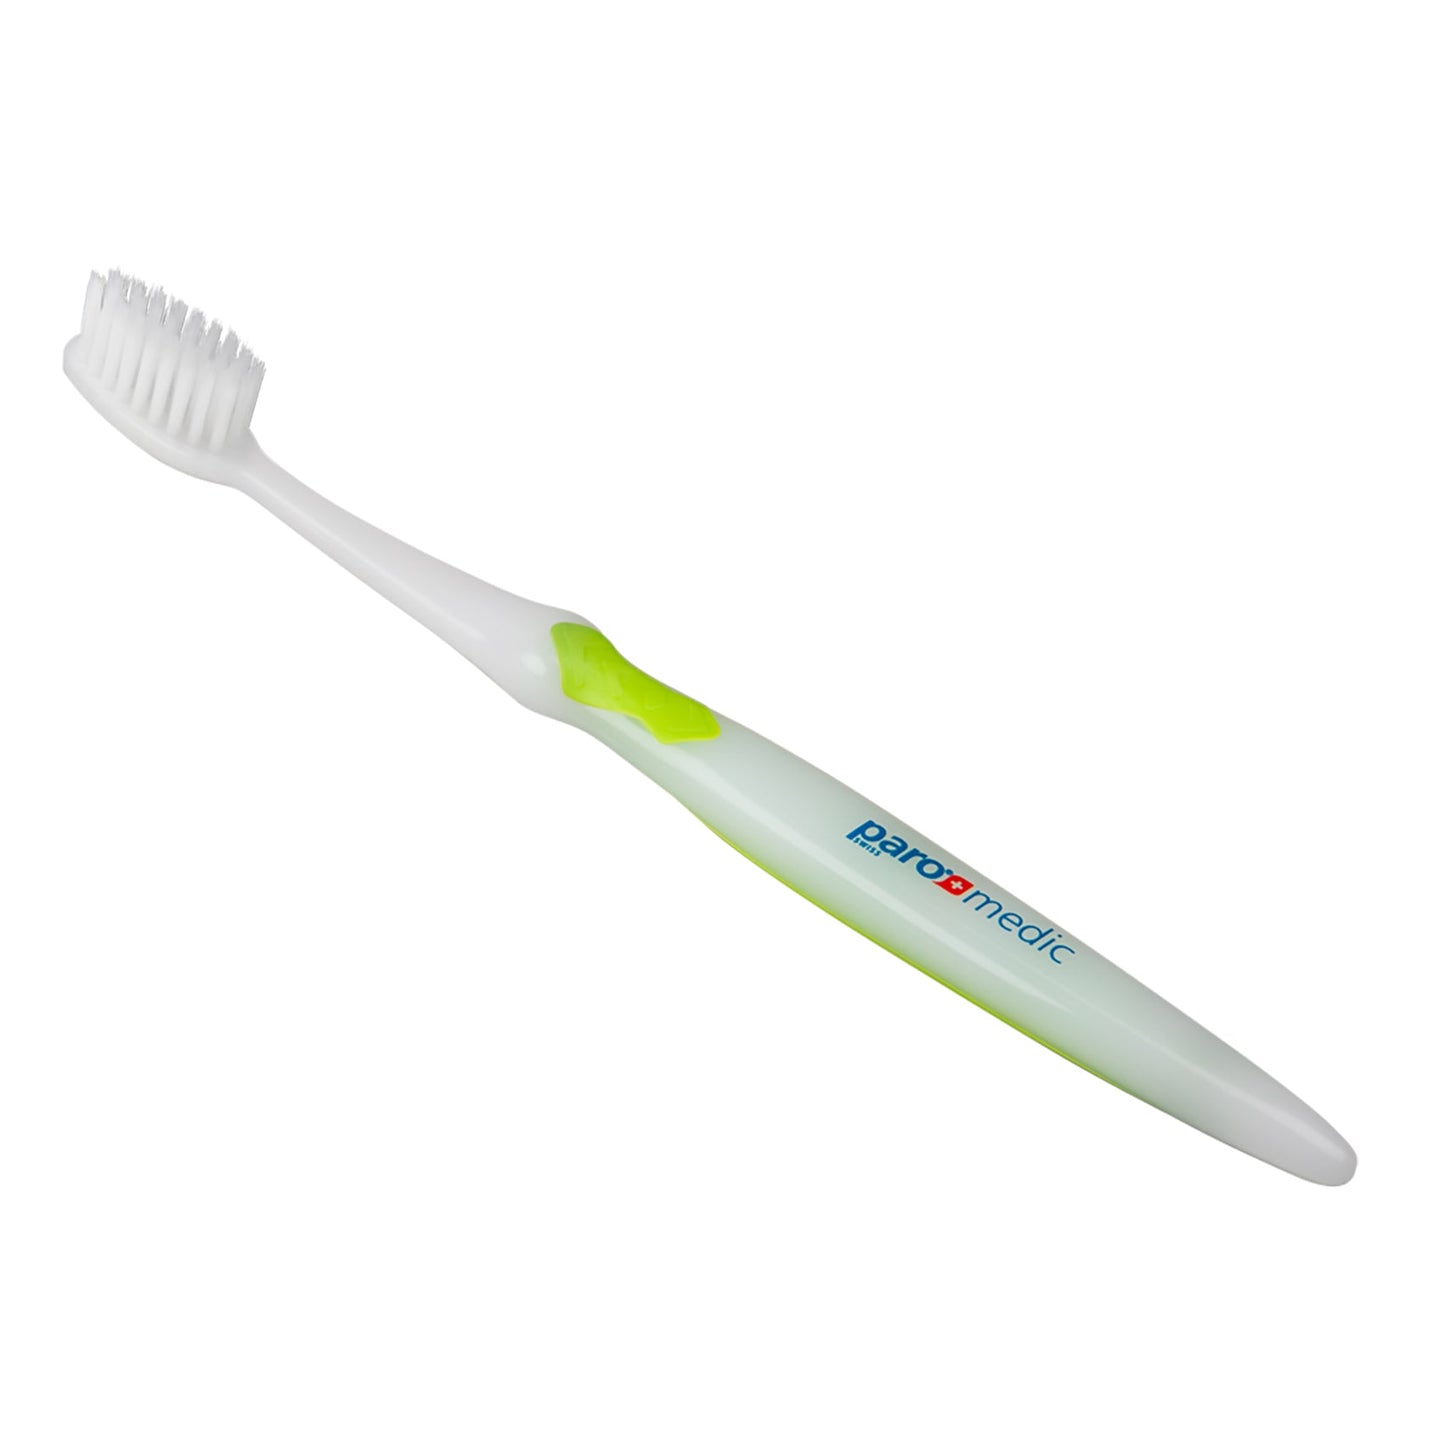 726 - paro medic, soft, ultra flexible, silky bristles, konex toothbrush